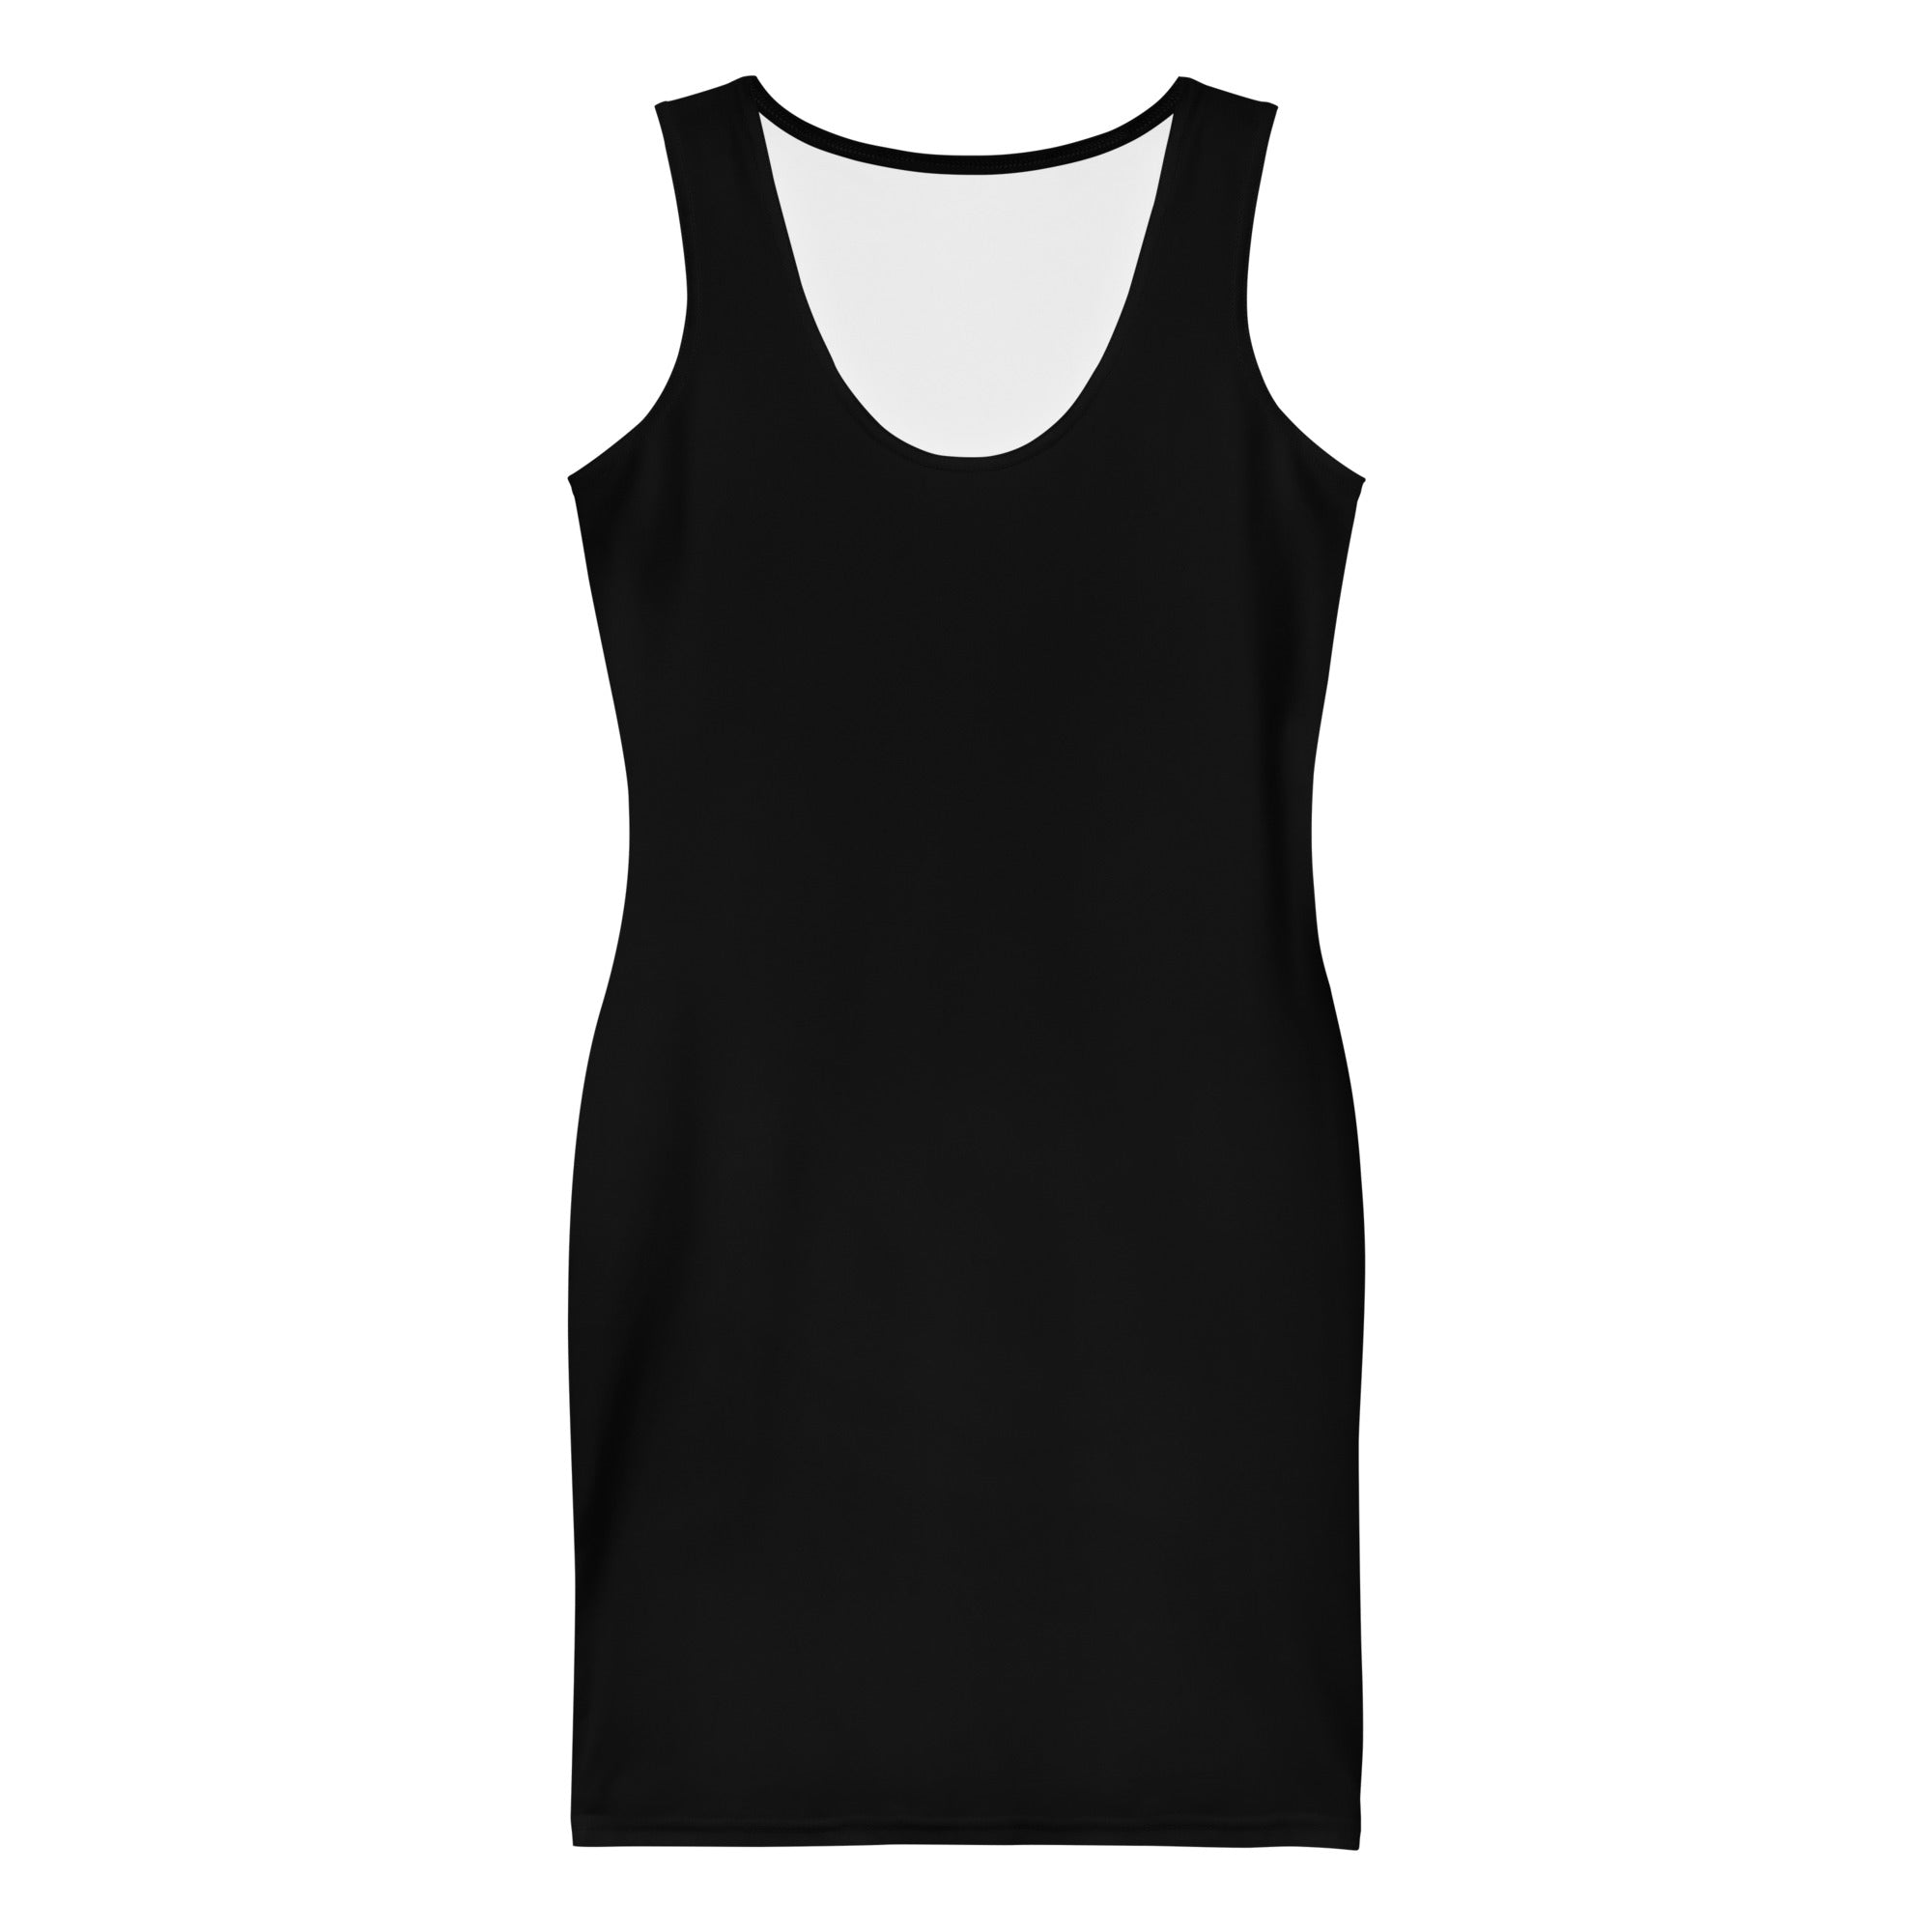 Black Bodycon Dress - Bodycon Dress - DRAGON FOXX™ - Black Bodycon Dress - 4963860_7788 - XS - Black - Bodycon Dress - Black - Black Bodycon Dress - Black Dress